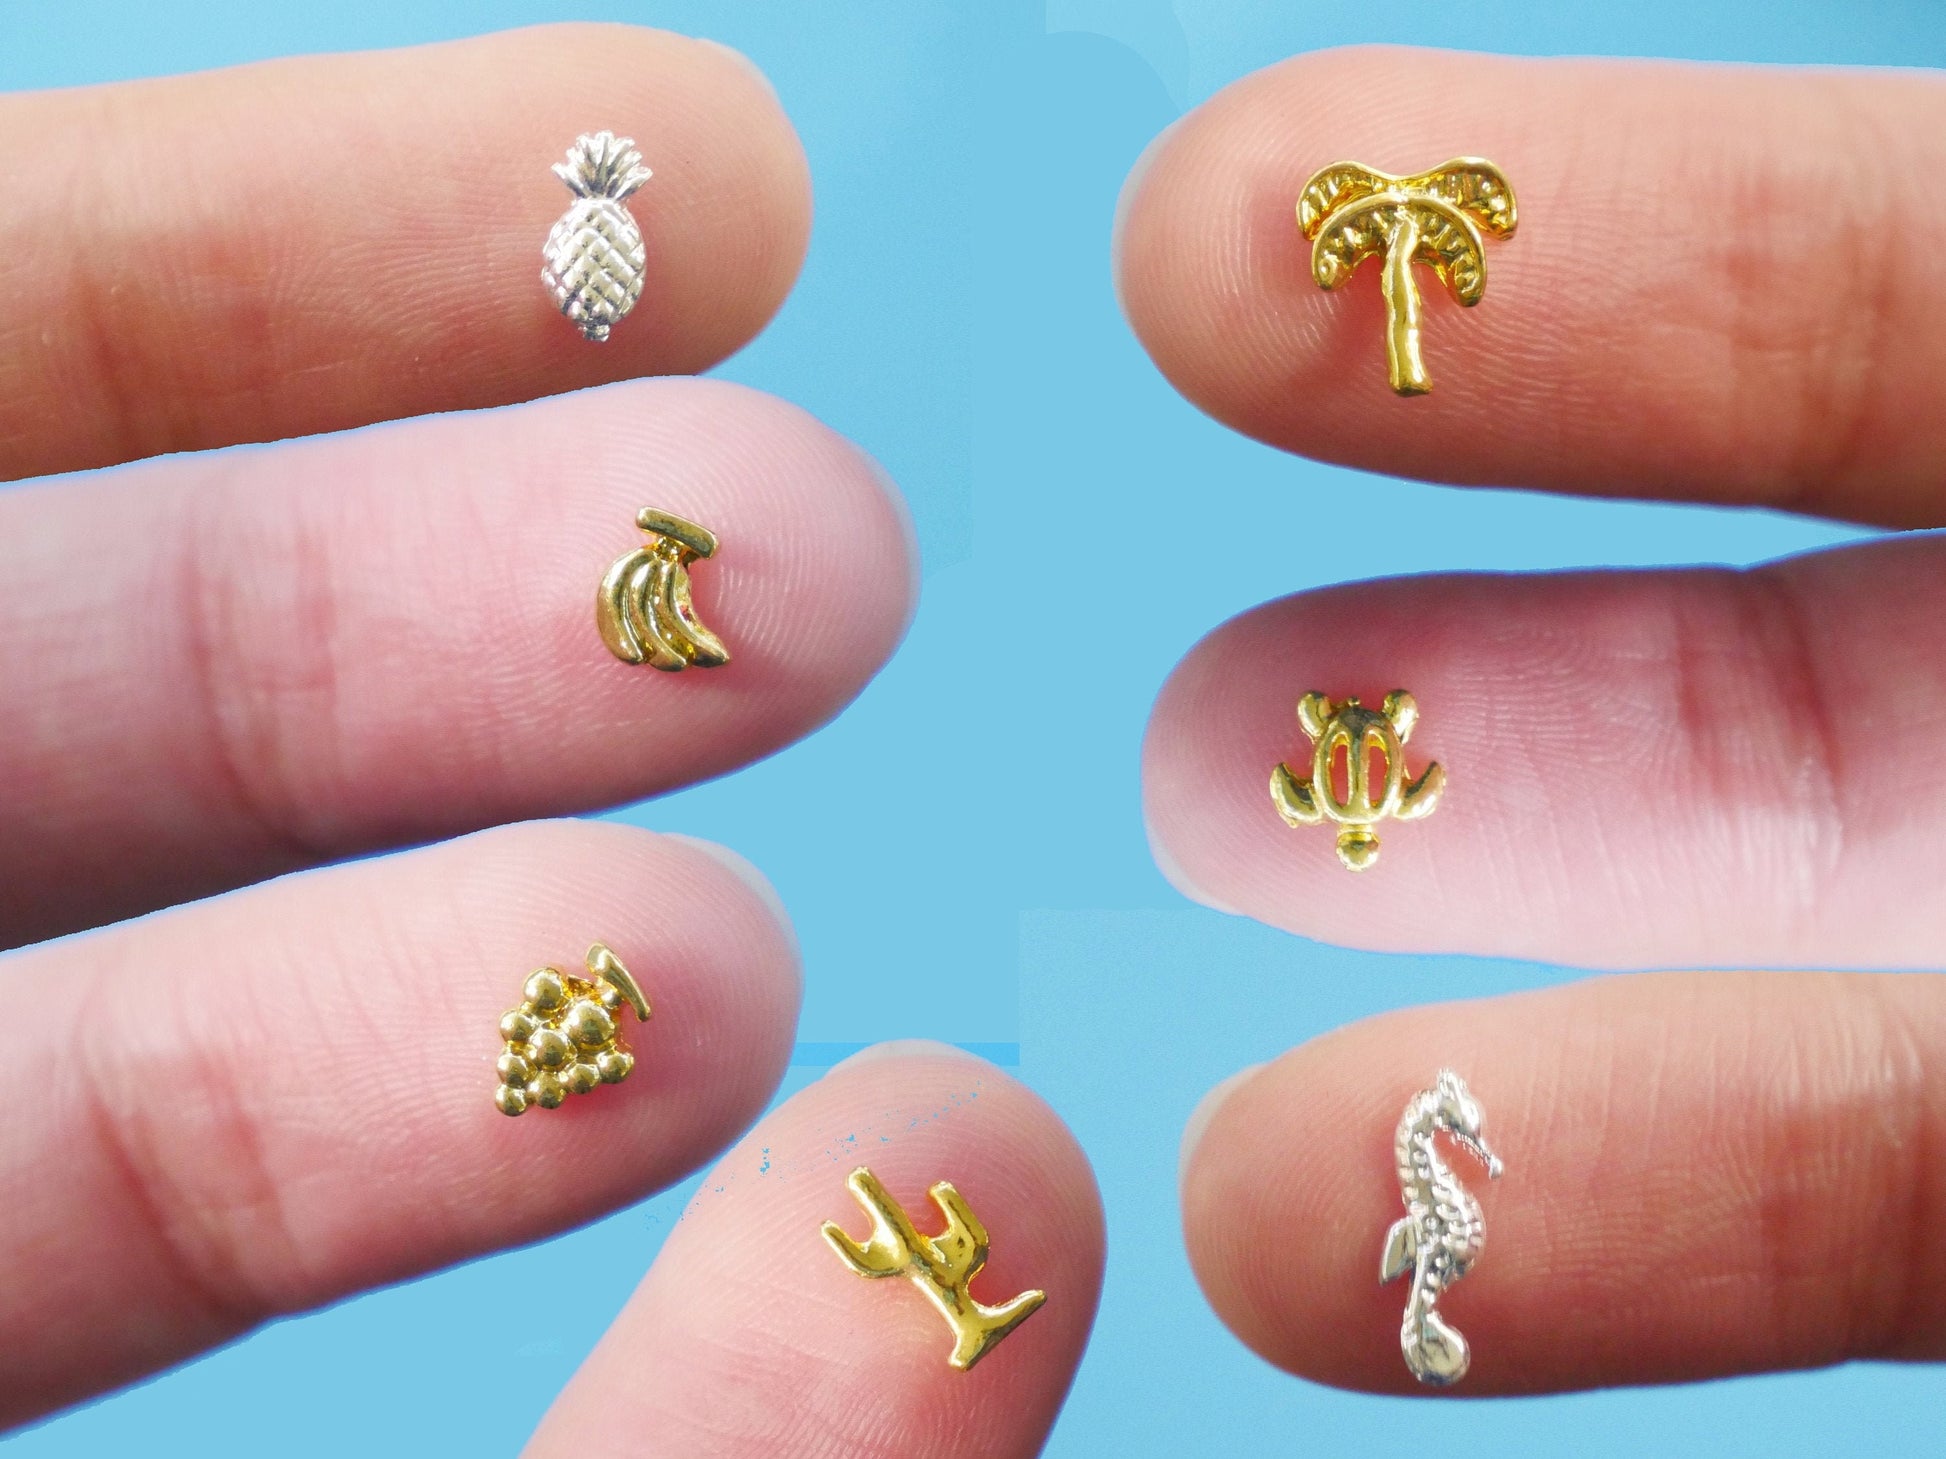 10 pcs Tropical Nail supply Metallic studs /ocean inspired beach nail design art nail